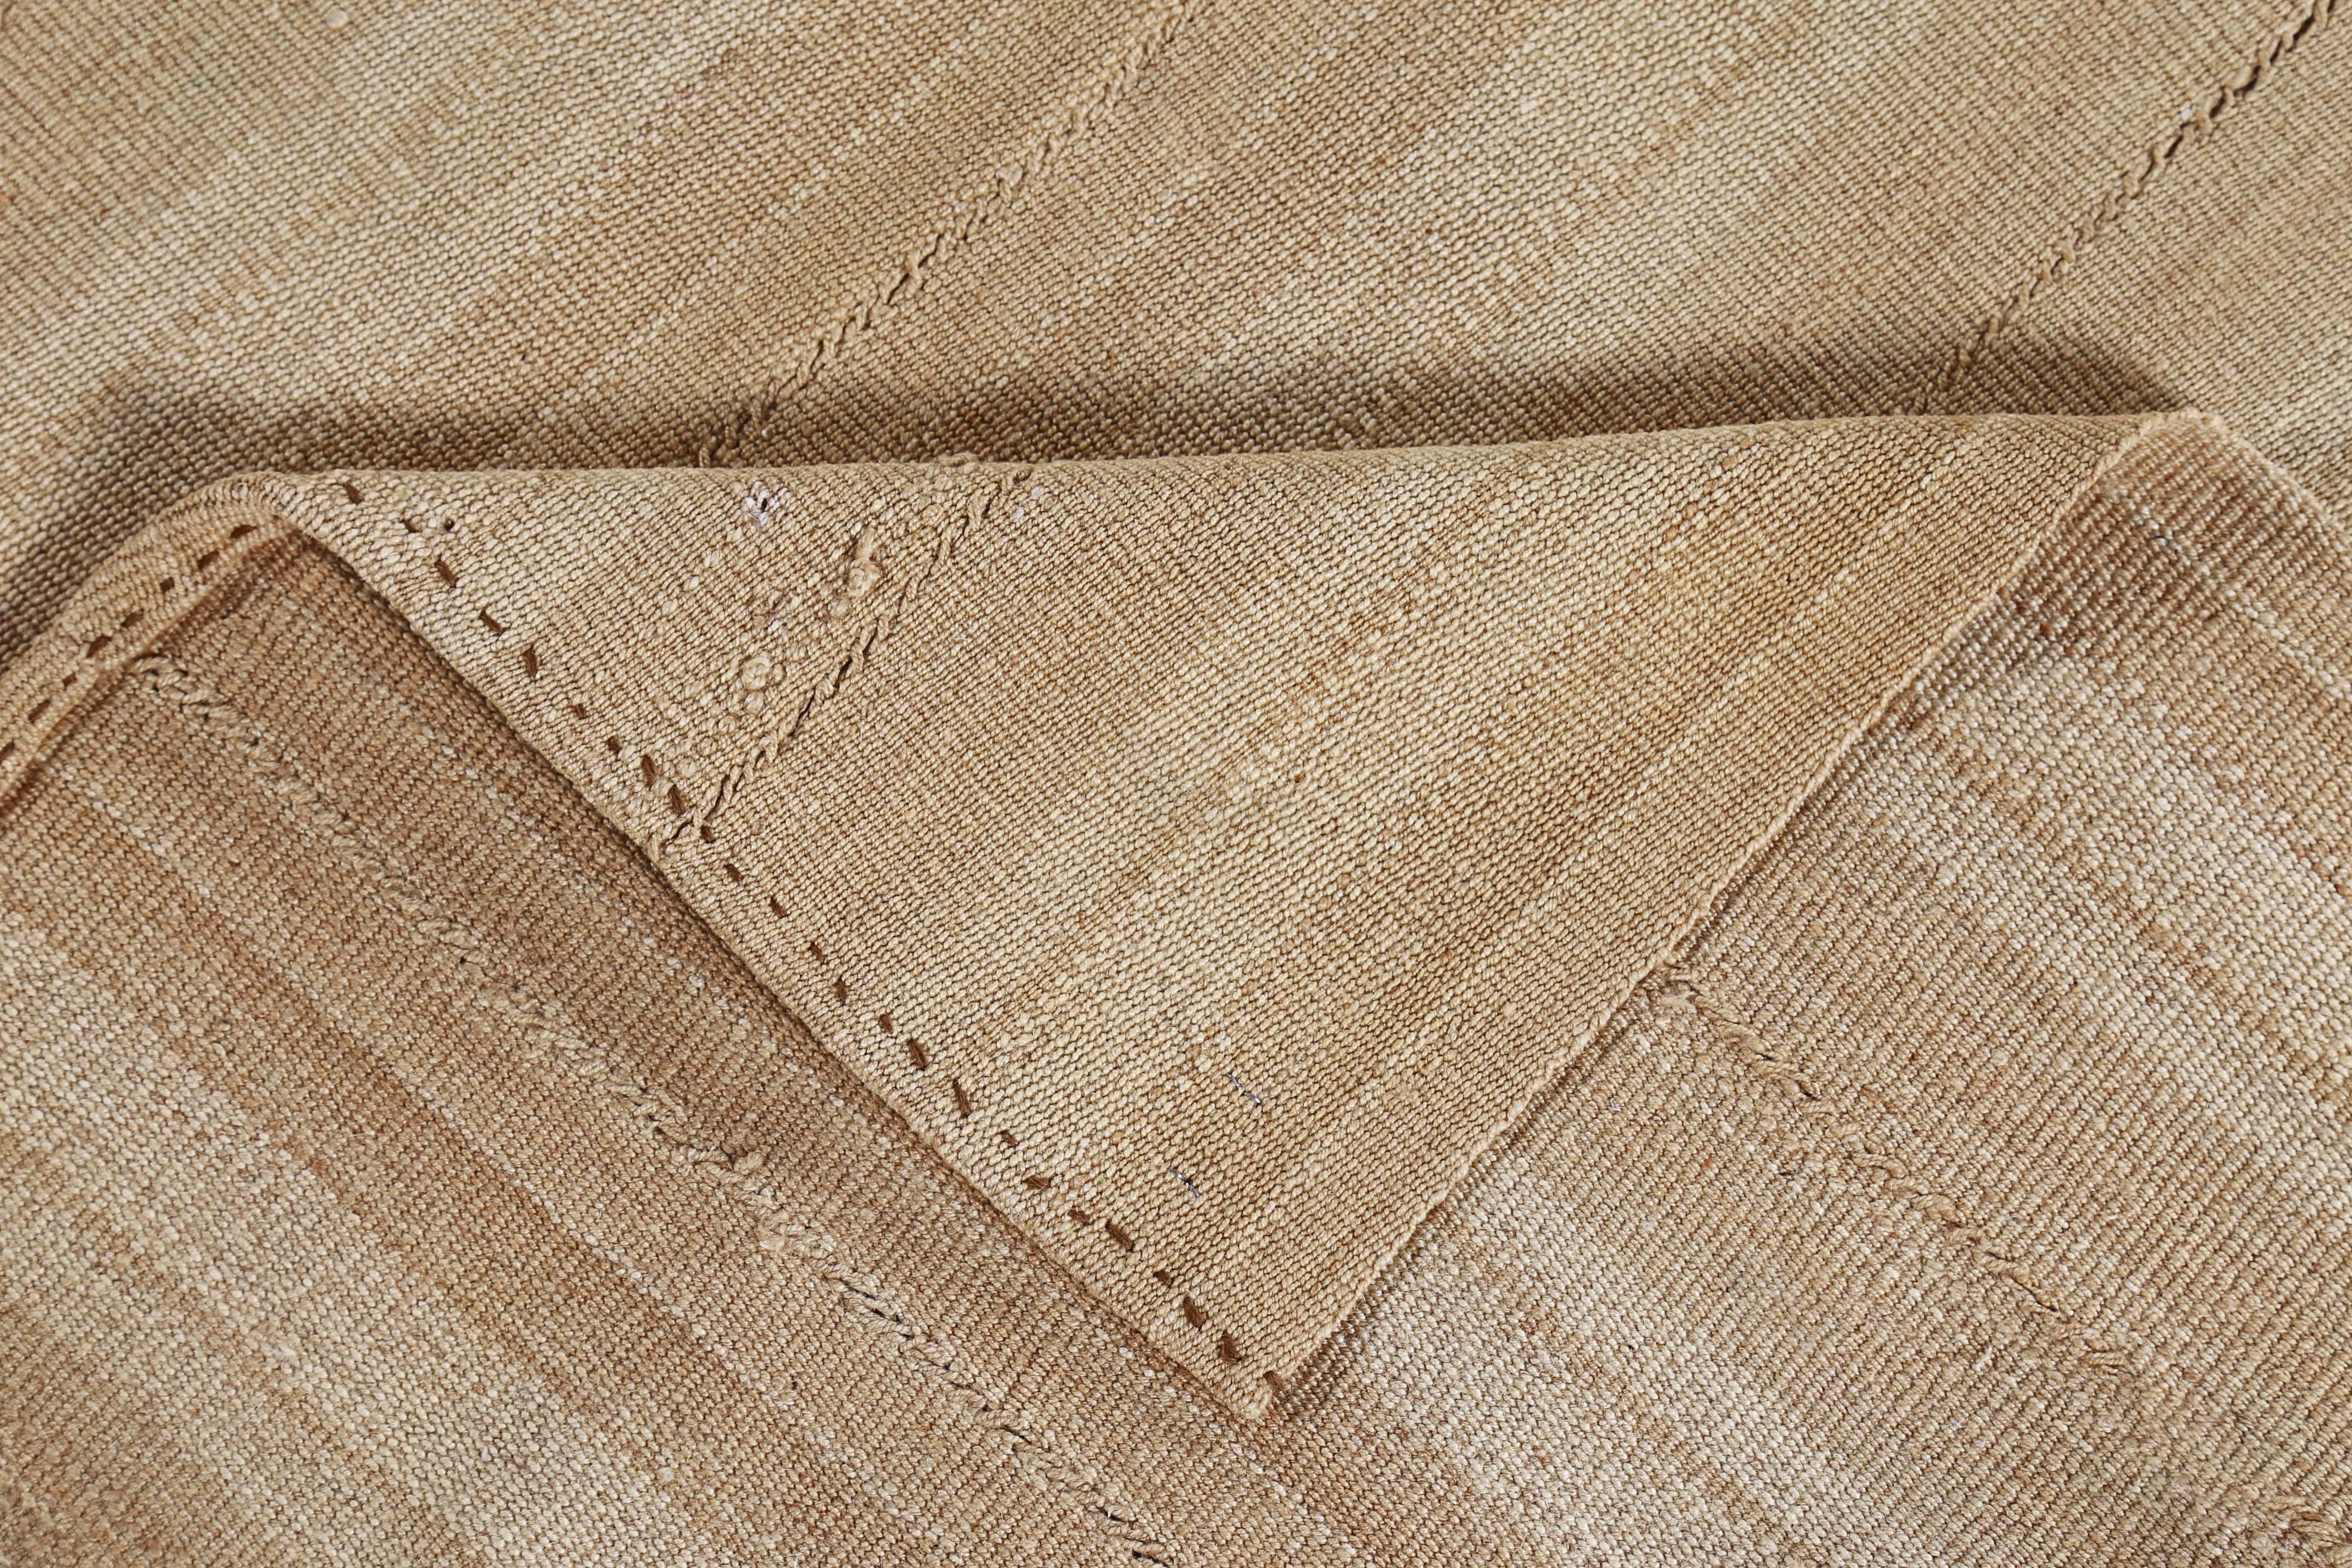 Wool Modern Turkish Kilim Rug with Brown on Beige Field